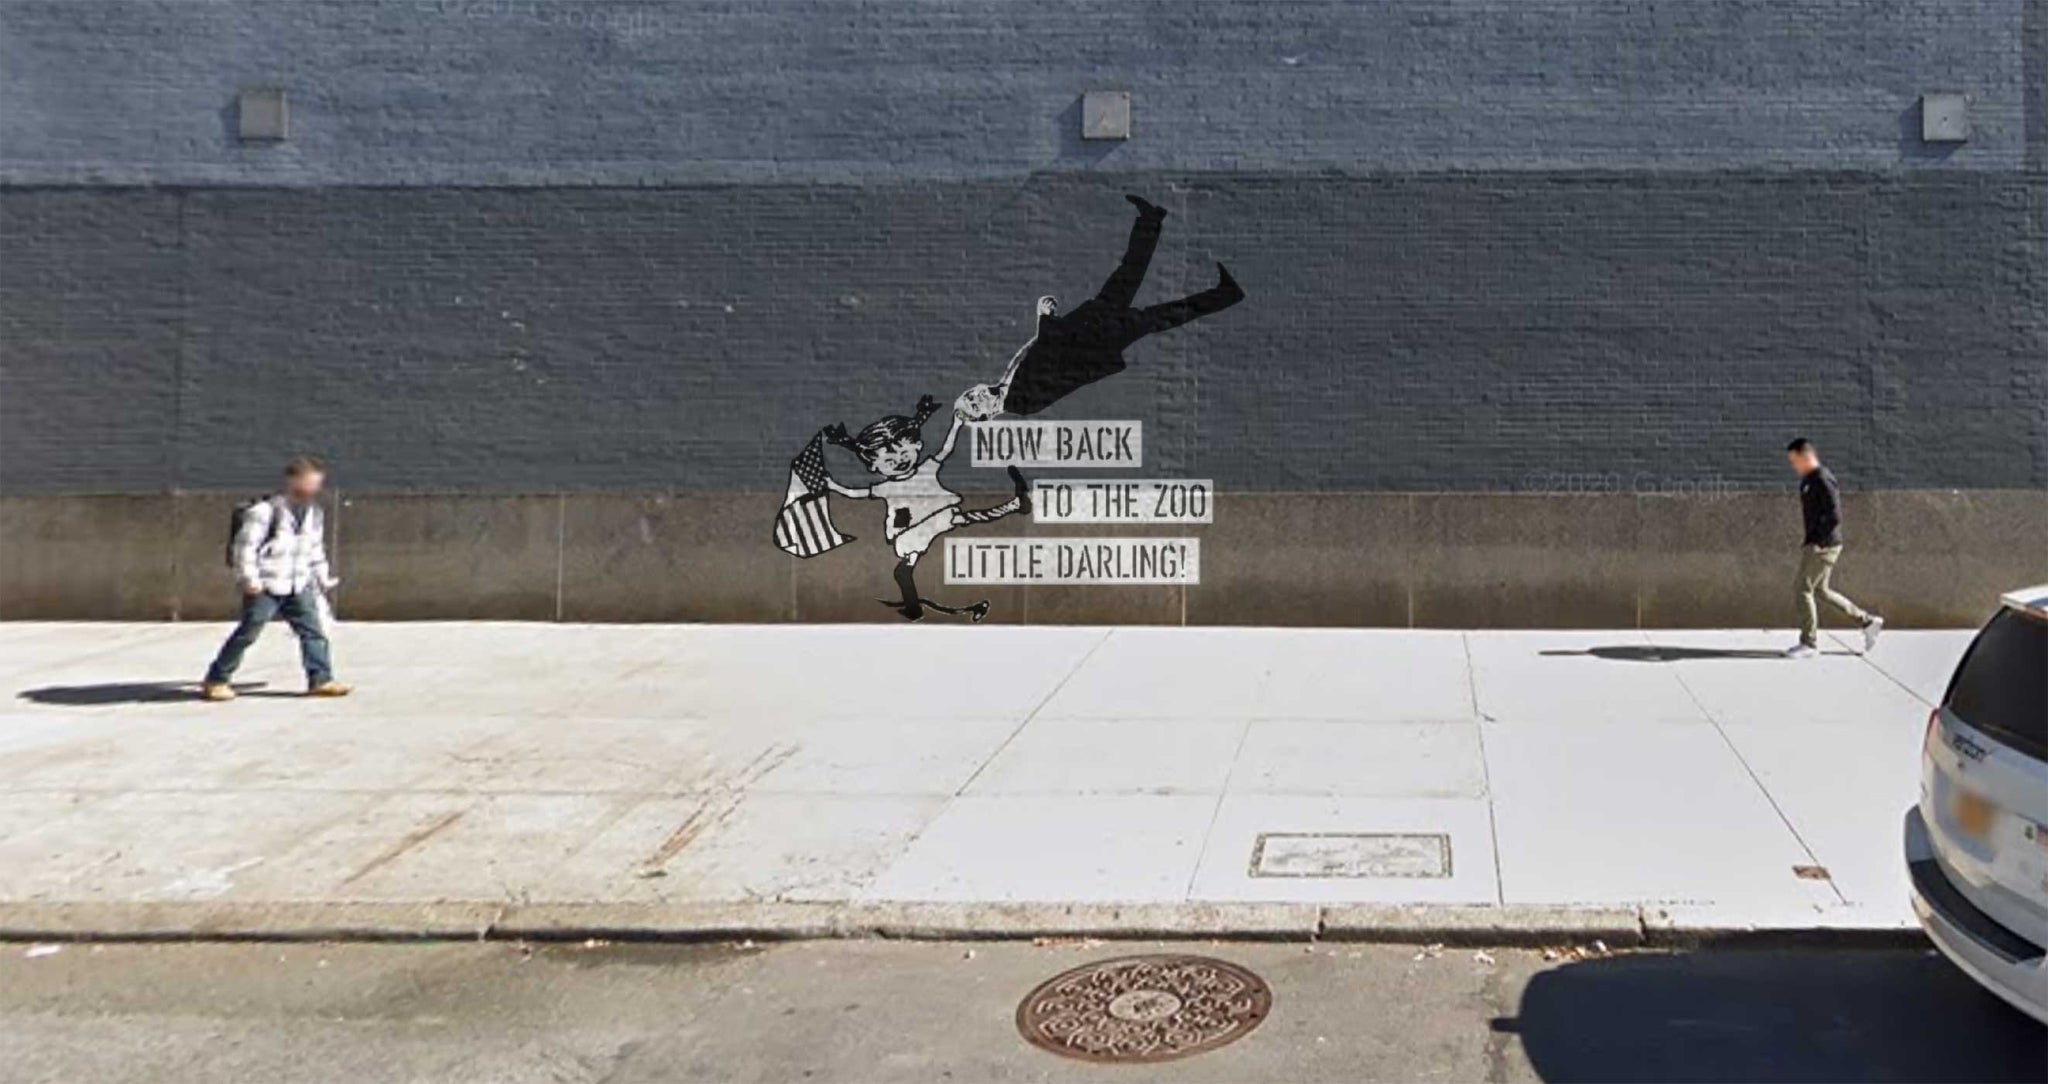 New york street art of Pippi Longstocking Ousting Donald Trump from office